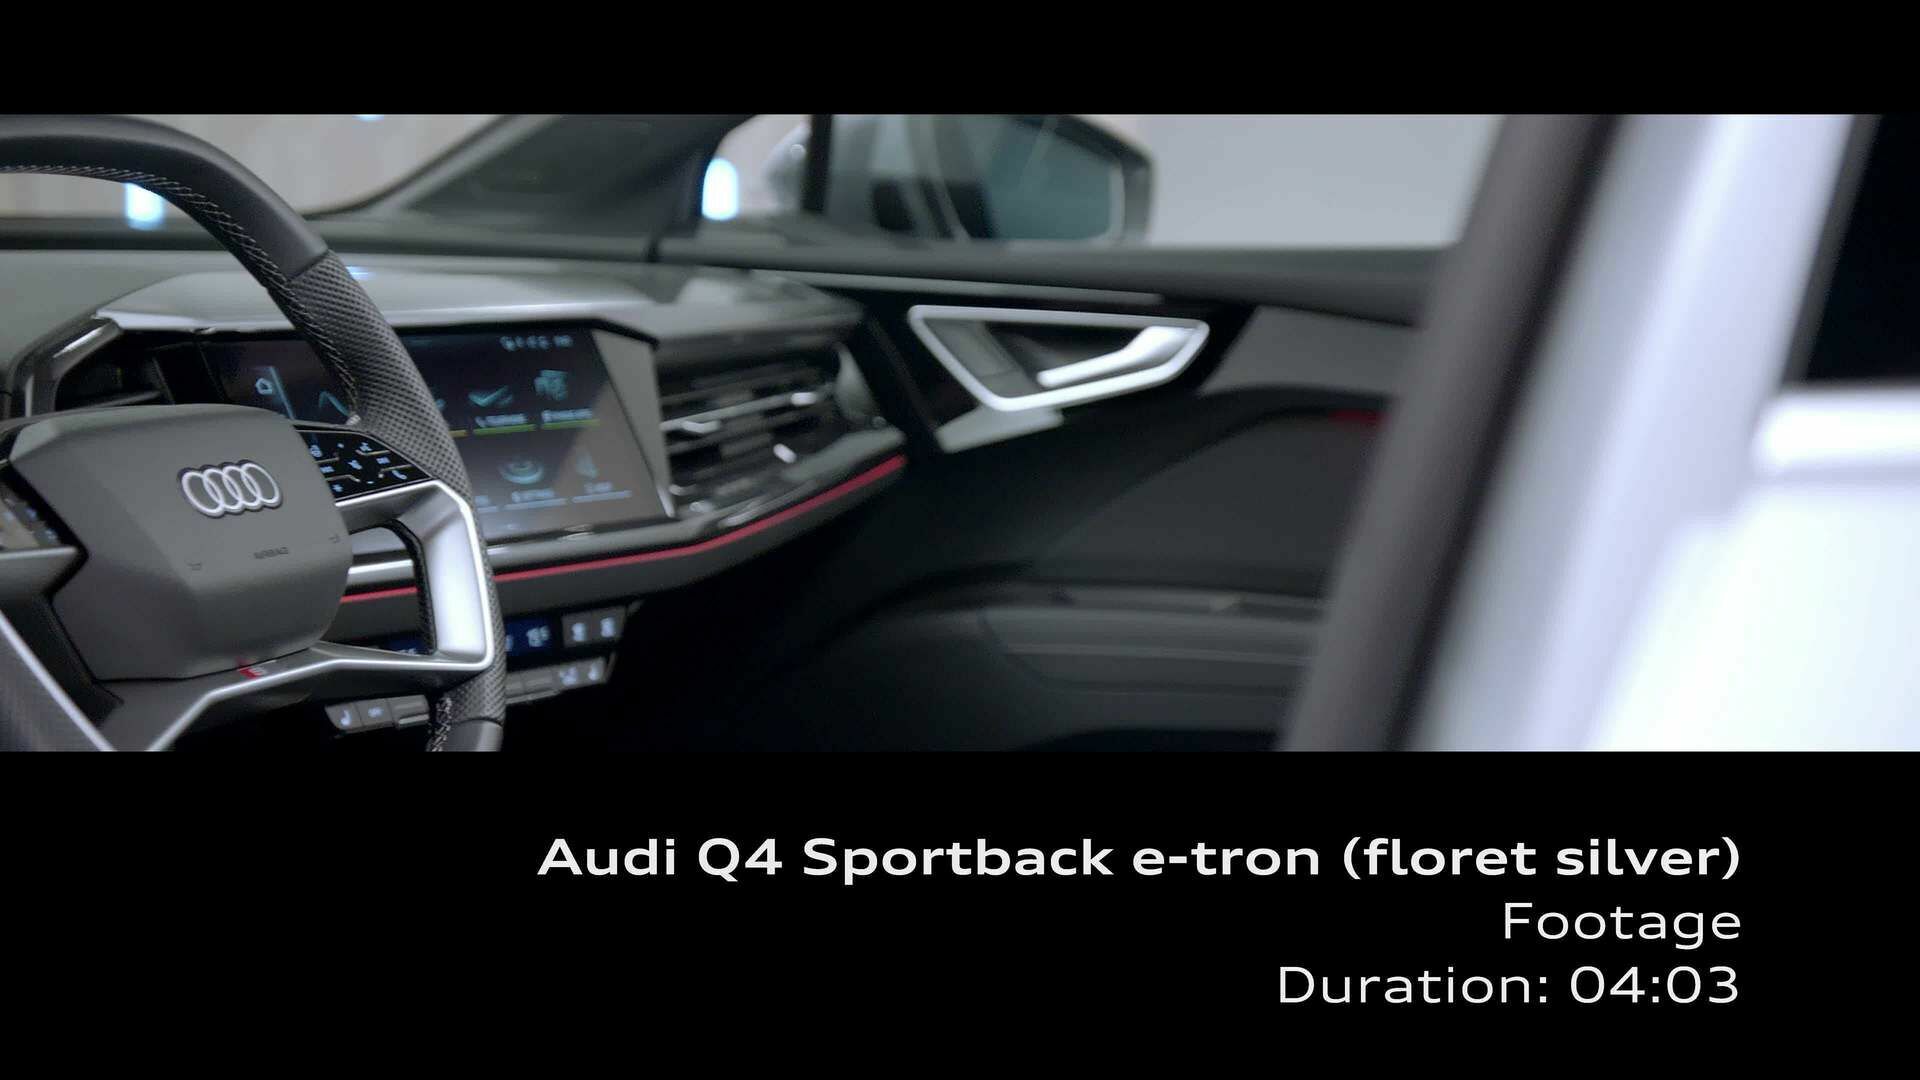 Footage: Audi Q4 Sportback e-tron Interior